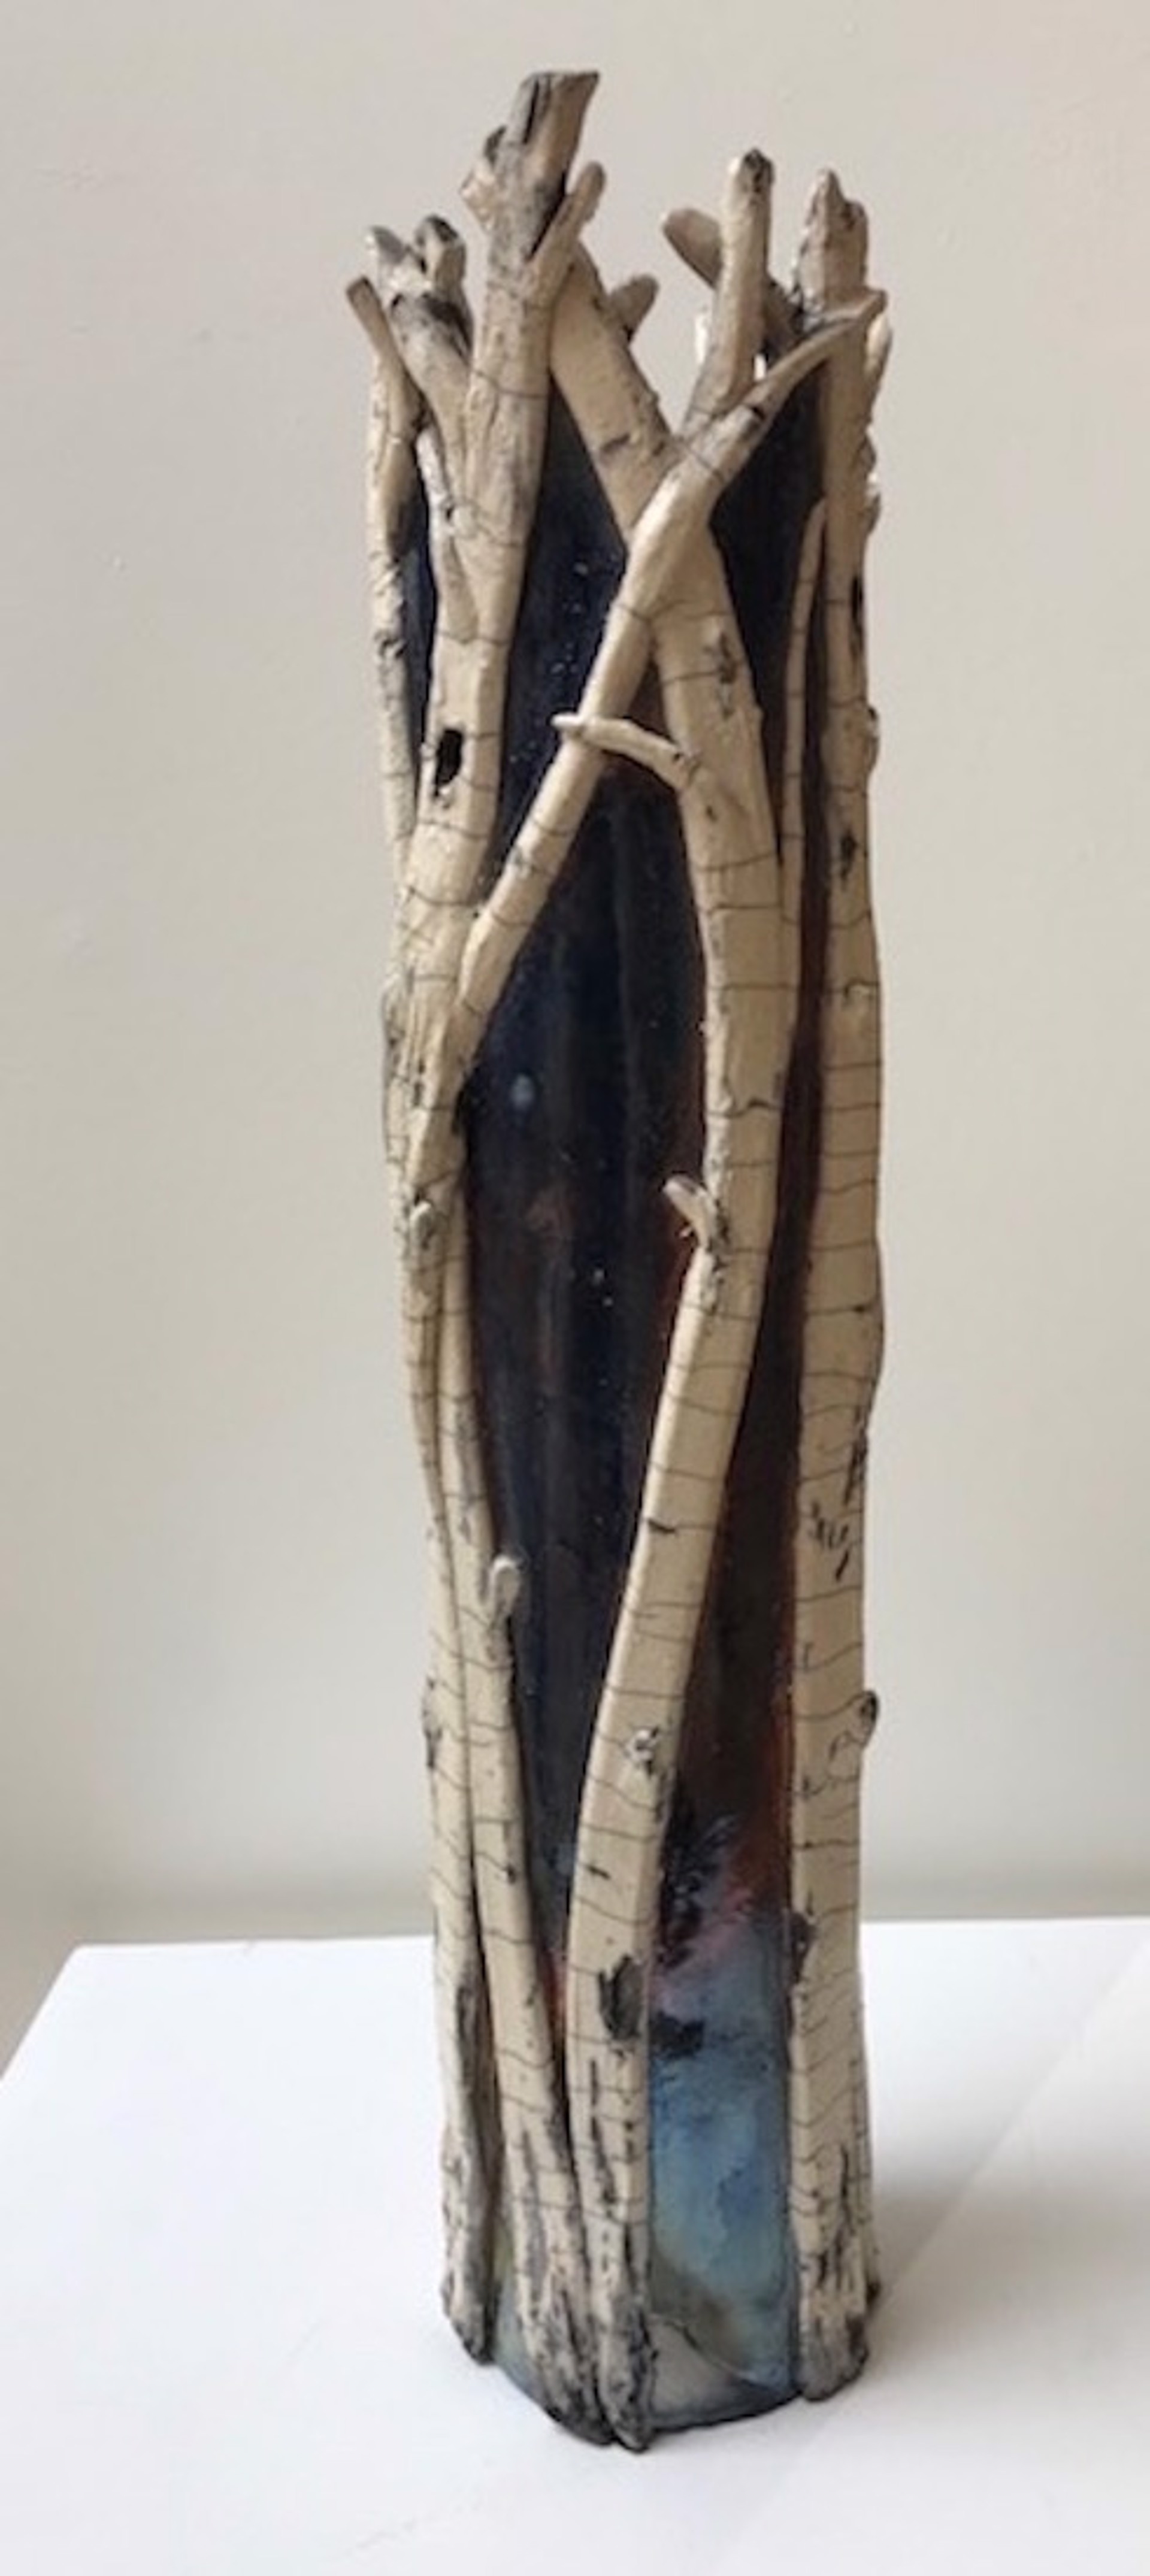 Aspen Vase by Lisa Wilkinson